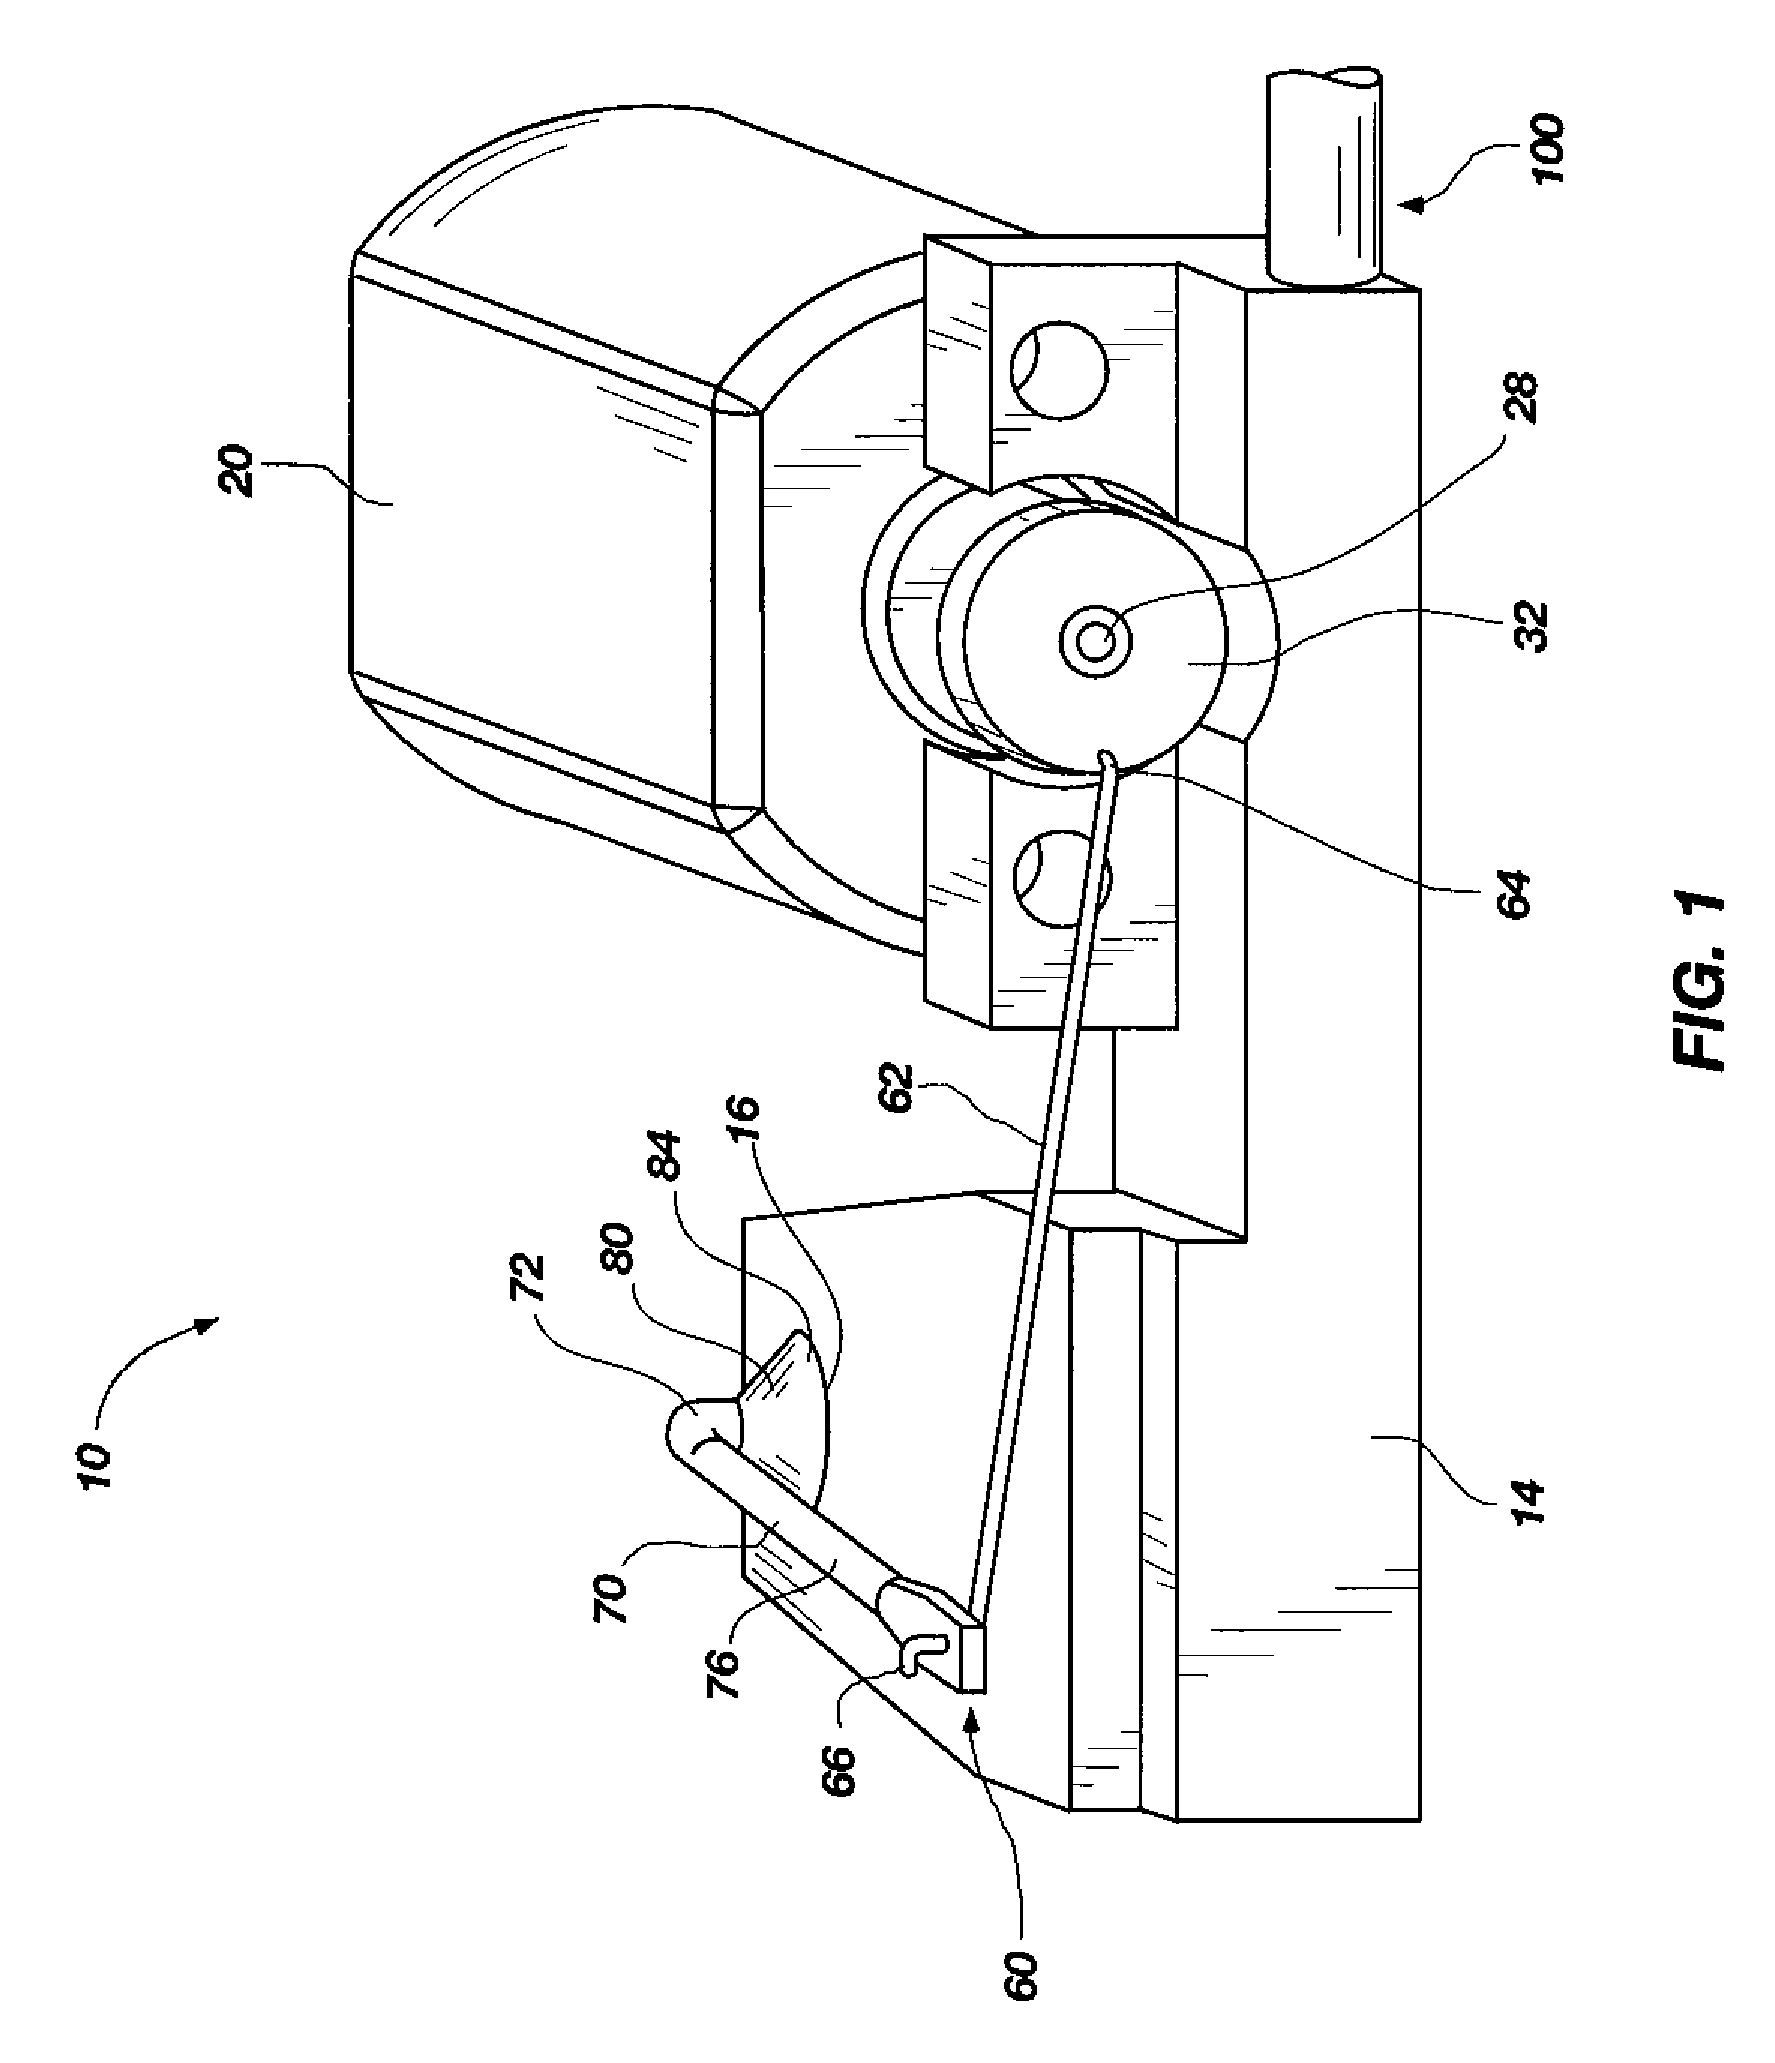 Miniature pump device and method